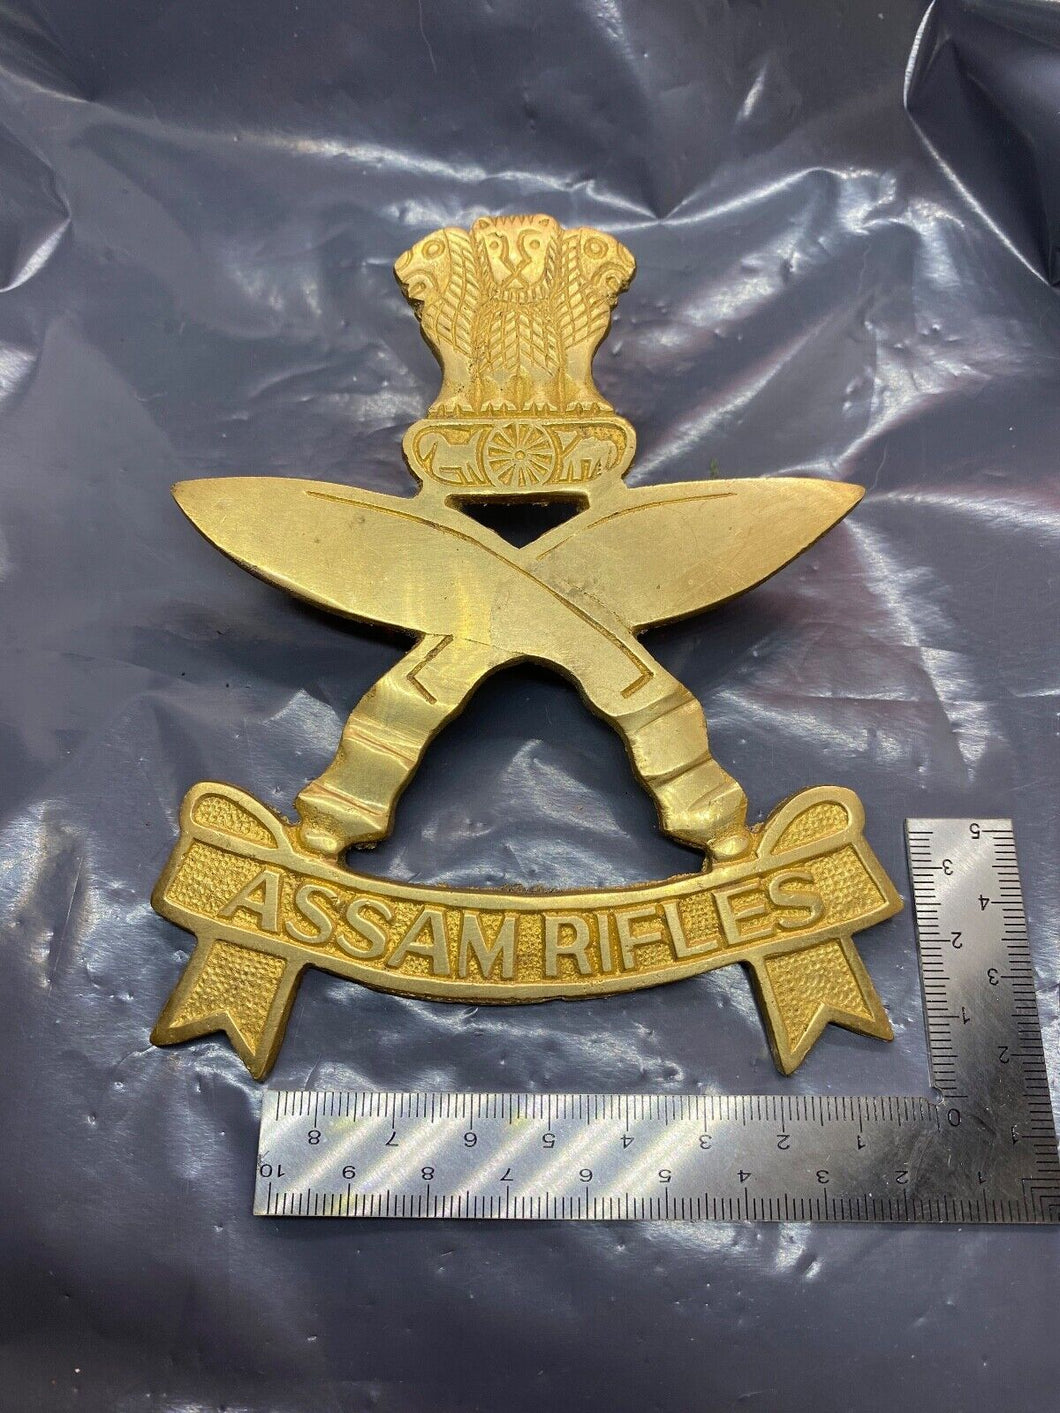 Original British Army Gurkha Regiment Assam Rifles Car Badge / Door Plate